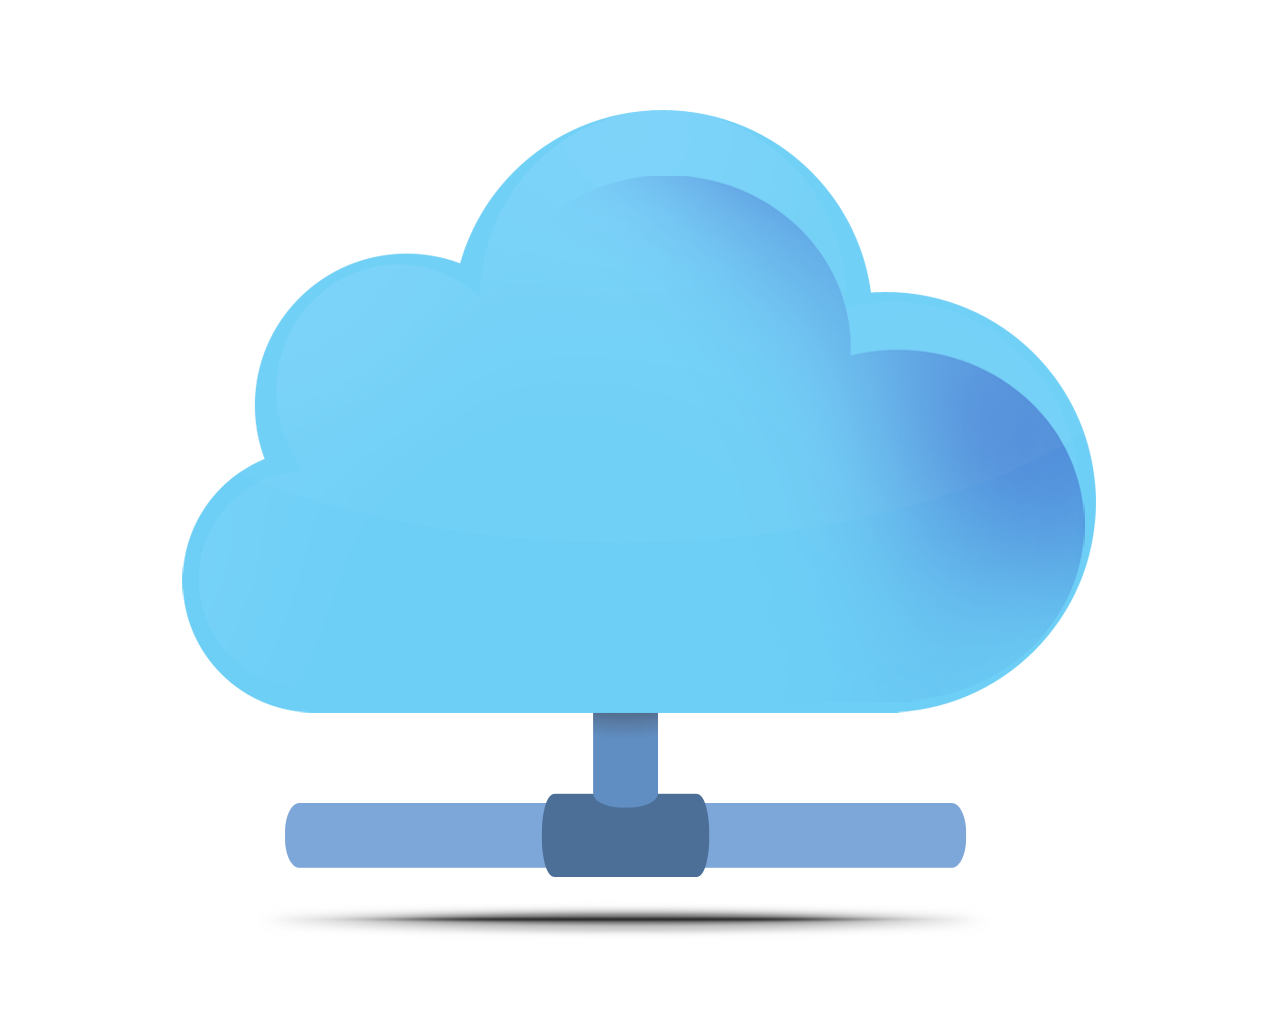 7 Internet Cloud Icon Images - Cloud Computing Icon, Cloud Storage ...